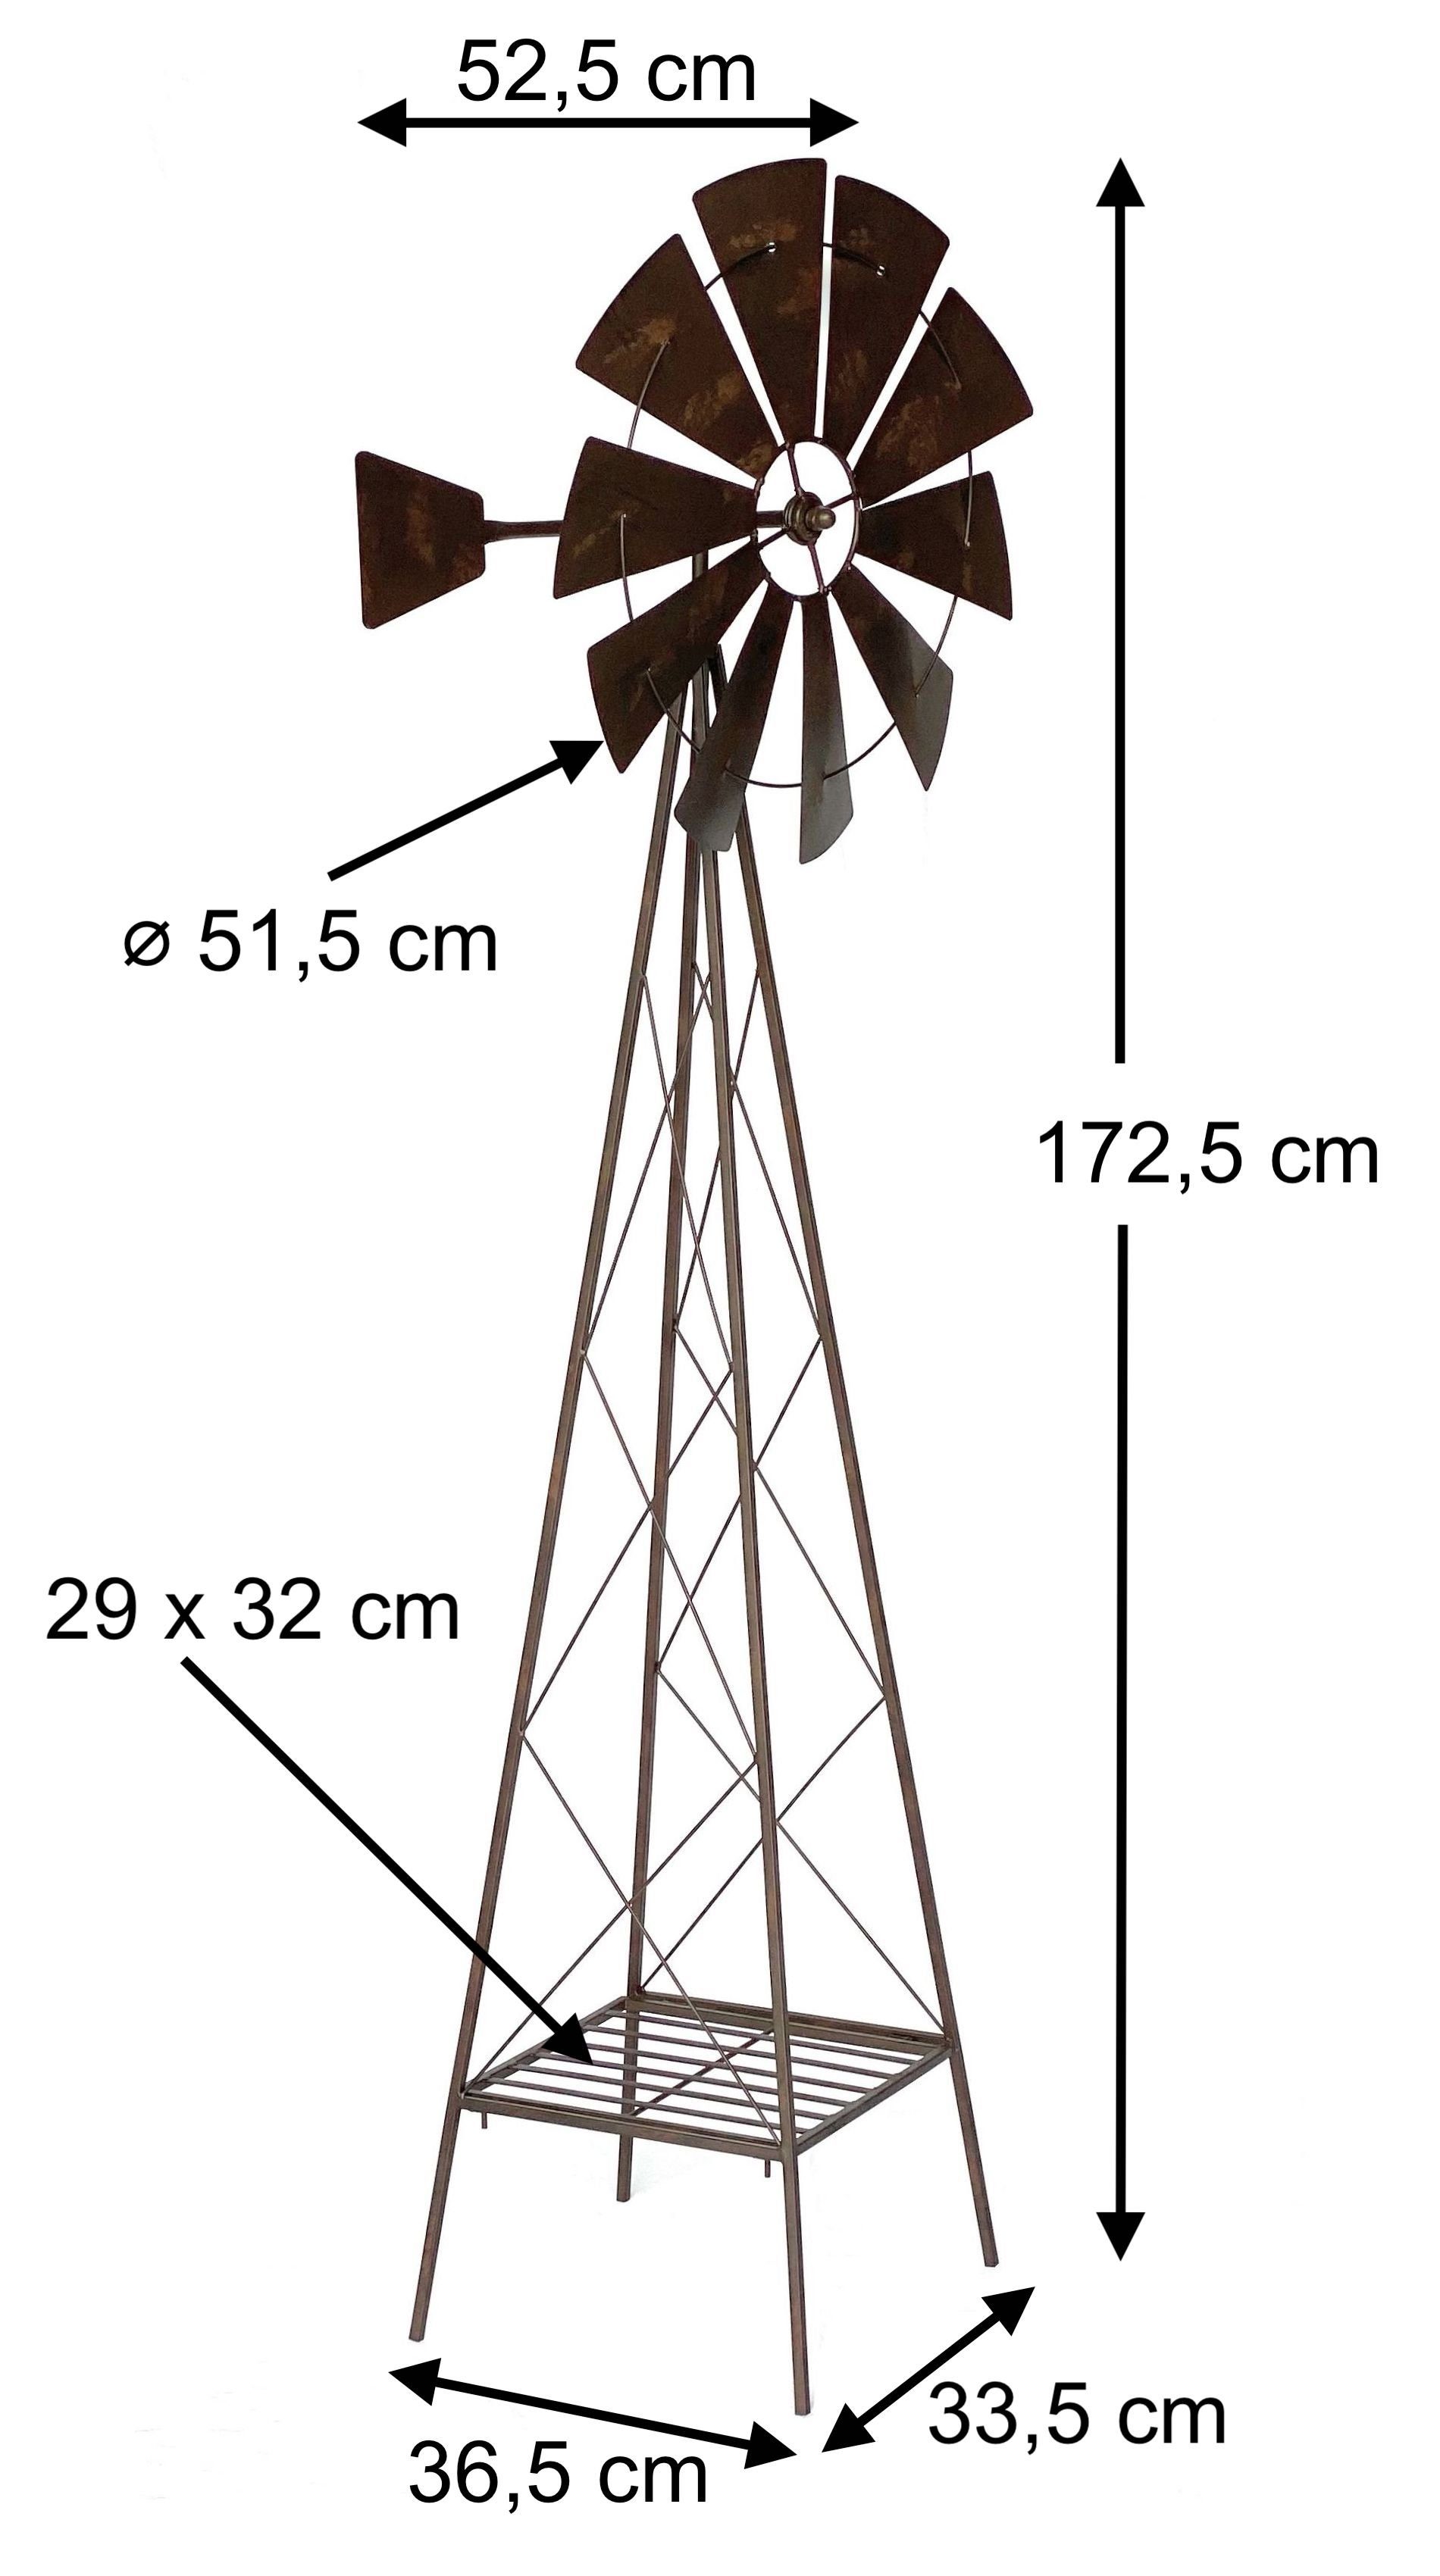 96019 Bodenstecker DanDiBo cm Wetterfest Braun kugelgelagert Windspiel Deko-Windrad 170 Gartendeko Windrad Gartenstecker Metall Garten Windmühle